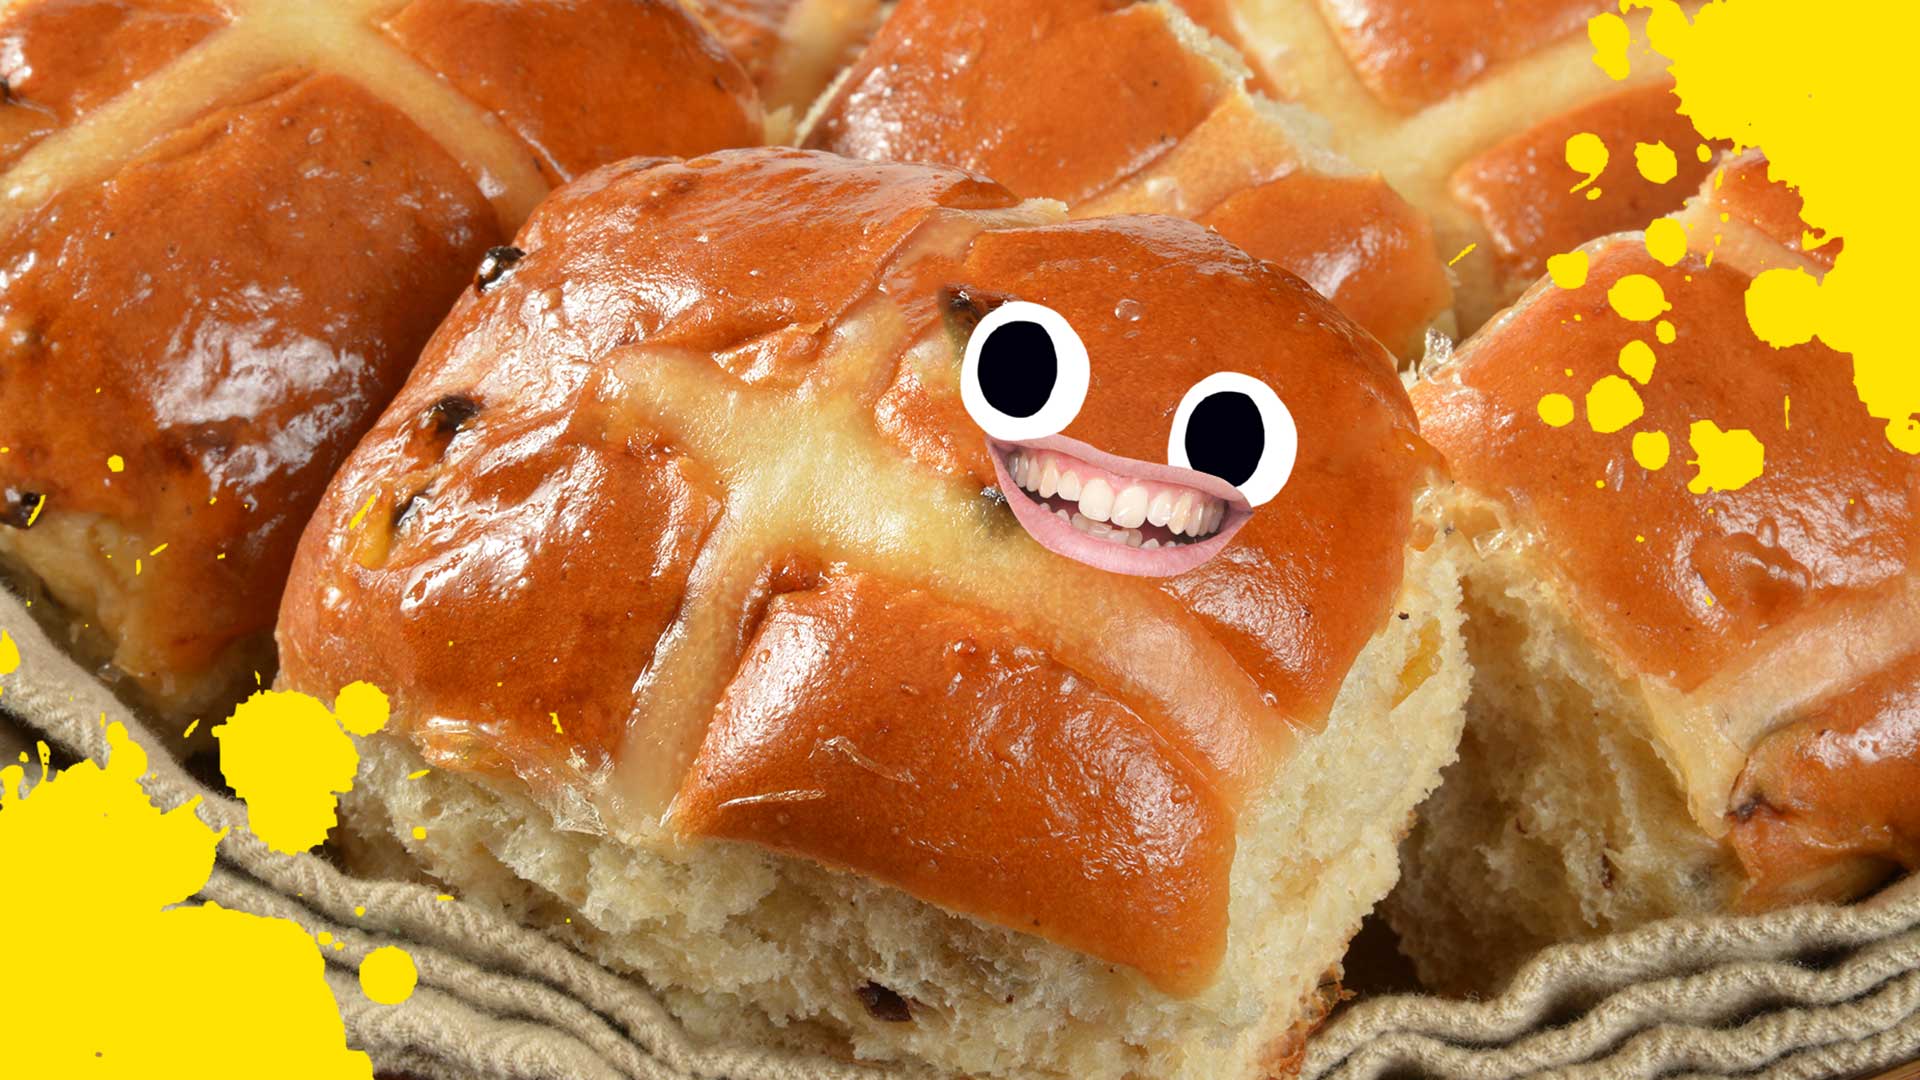 A tasty hot cross bun